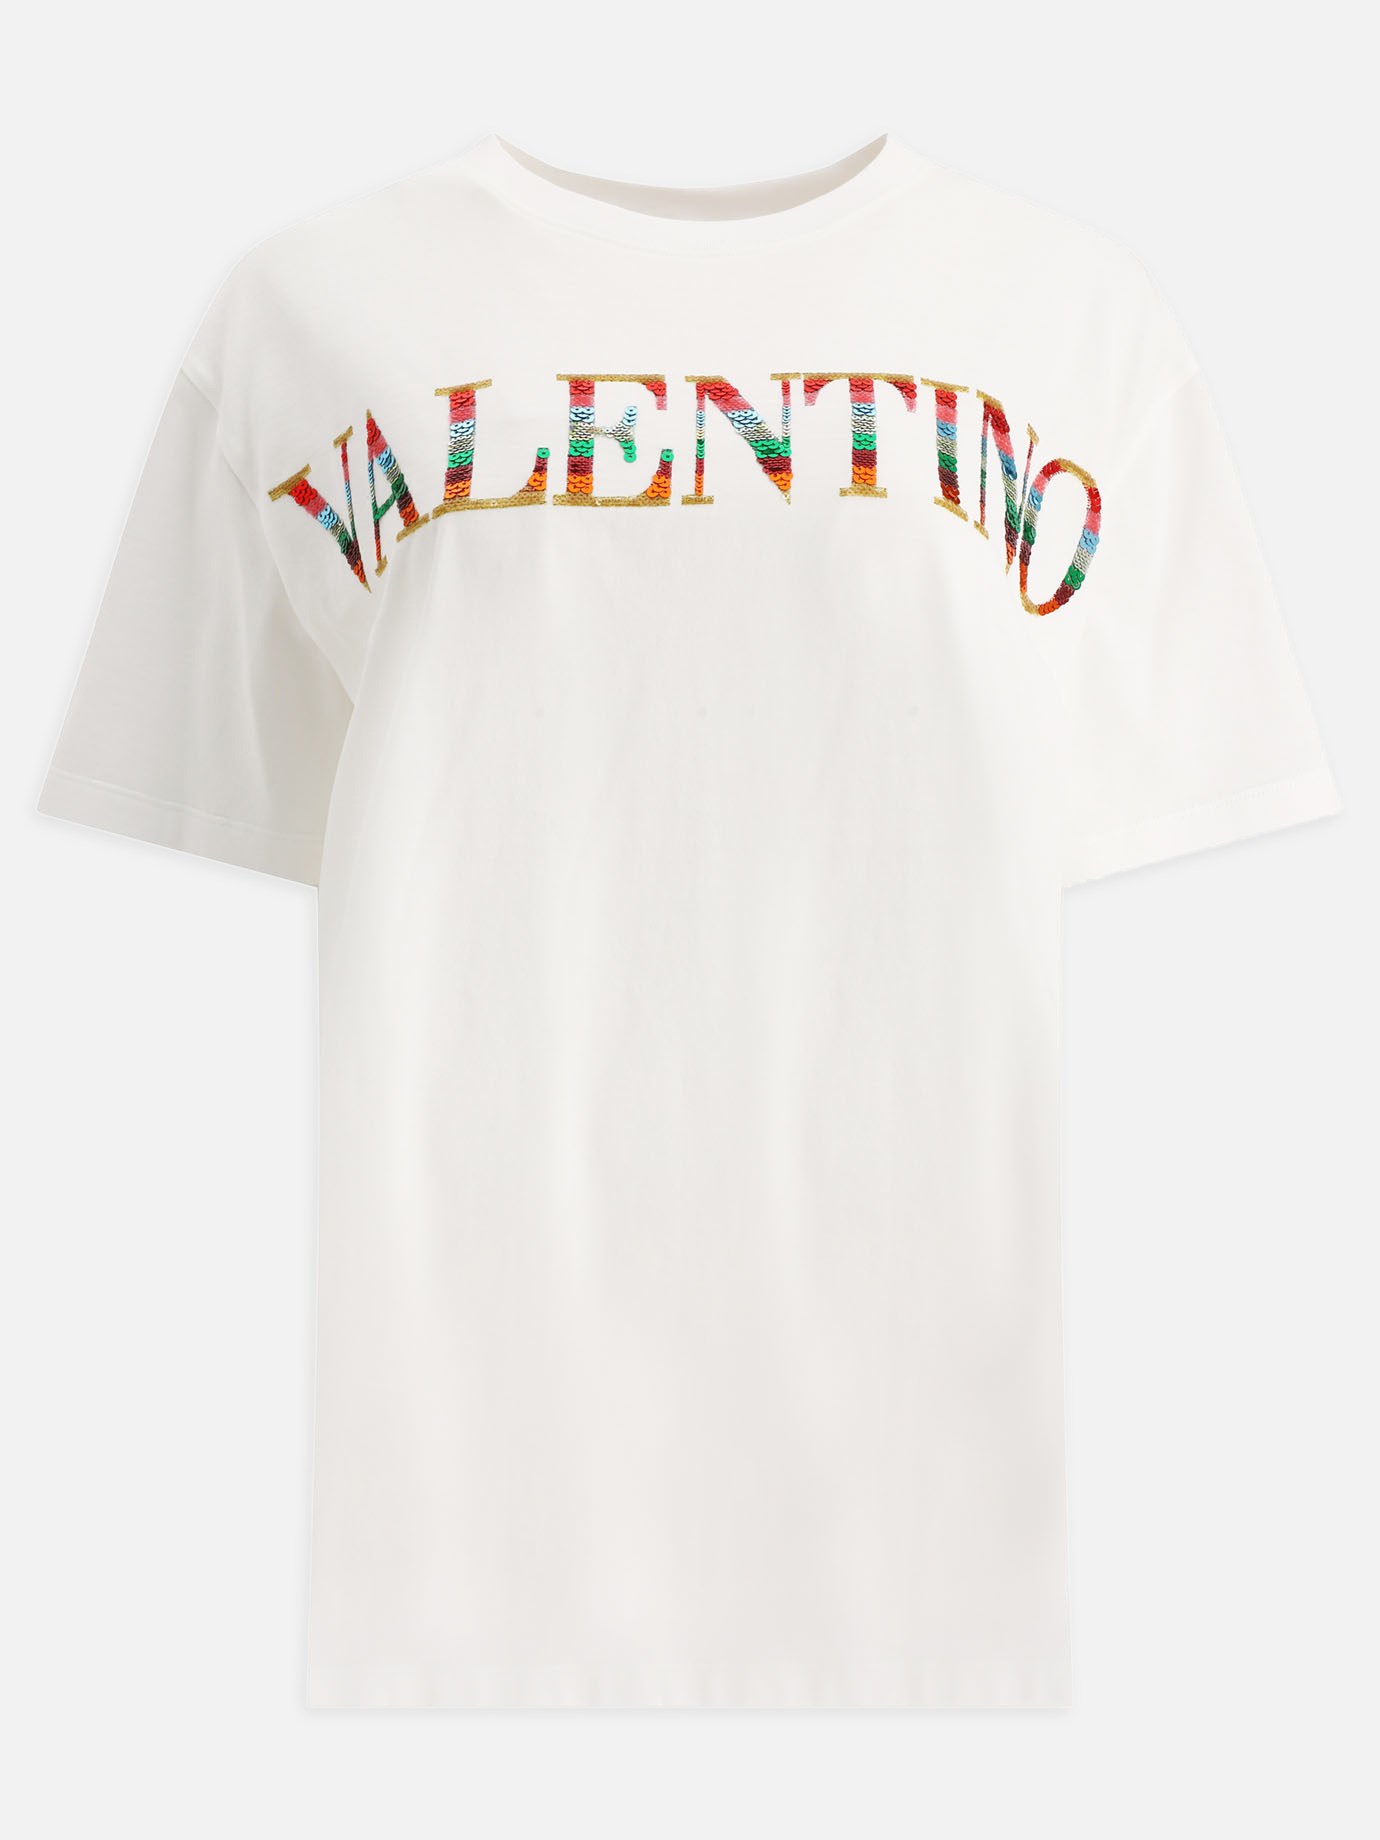  Sequin Valentino  t-shirt by Valentino